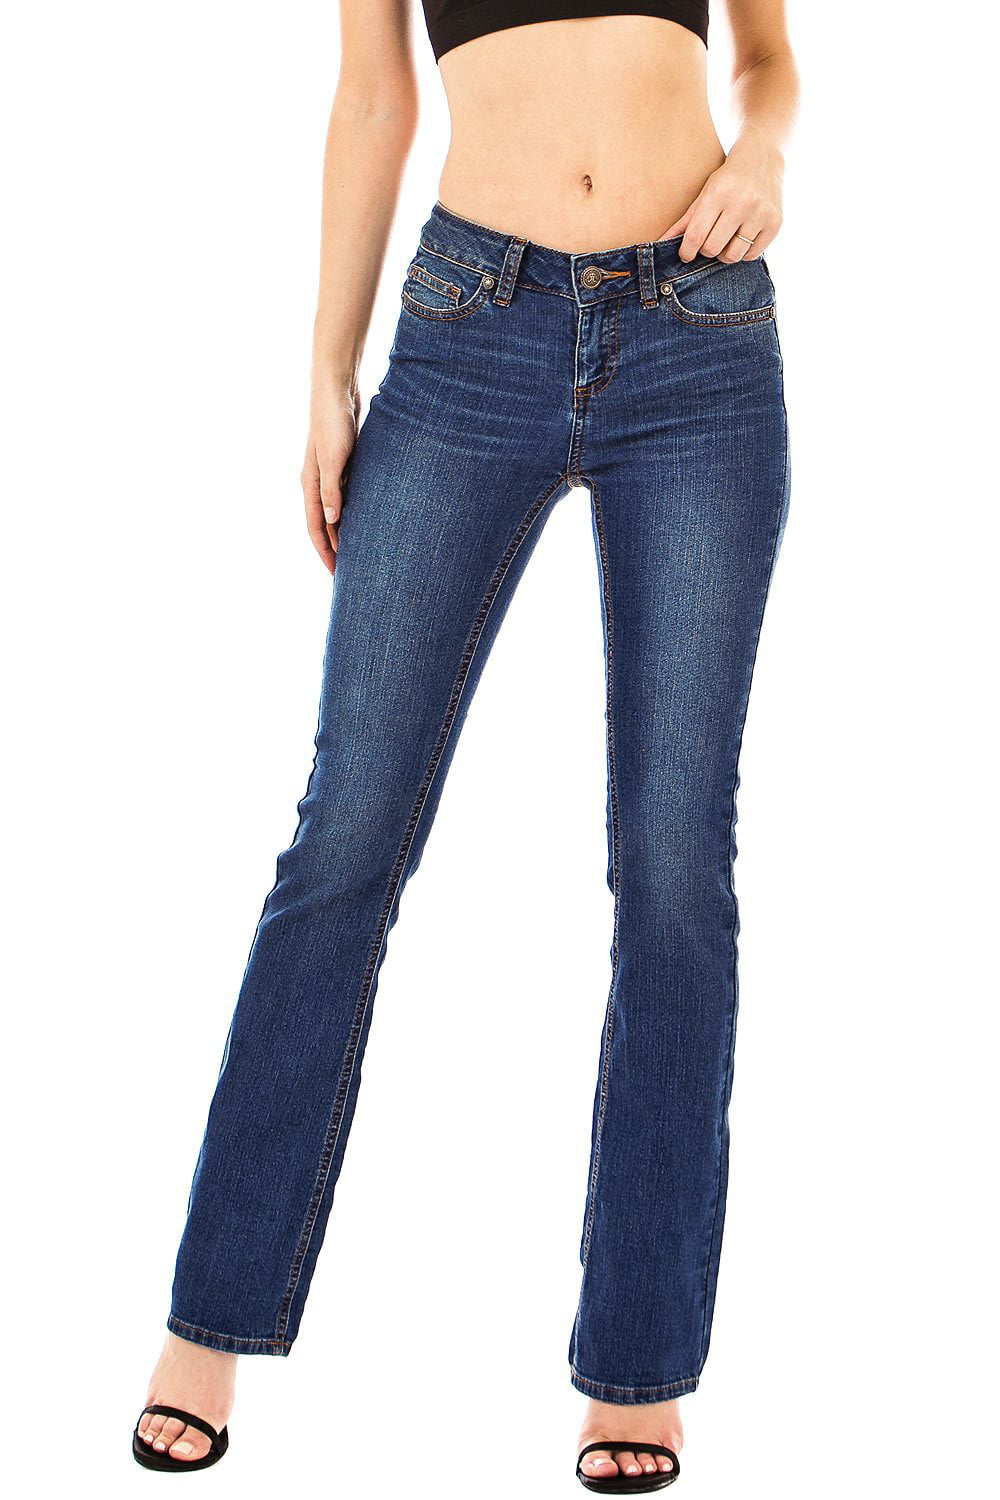 Wax Jean - Wax Jeans Women's Juniors Mid Rise Slimming Bootcut Jeans (5 ...